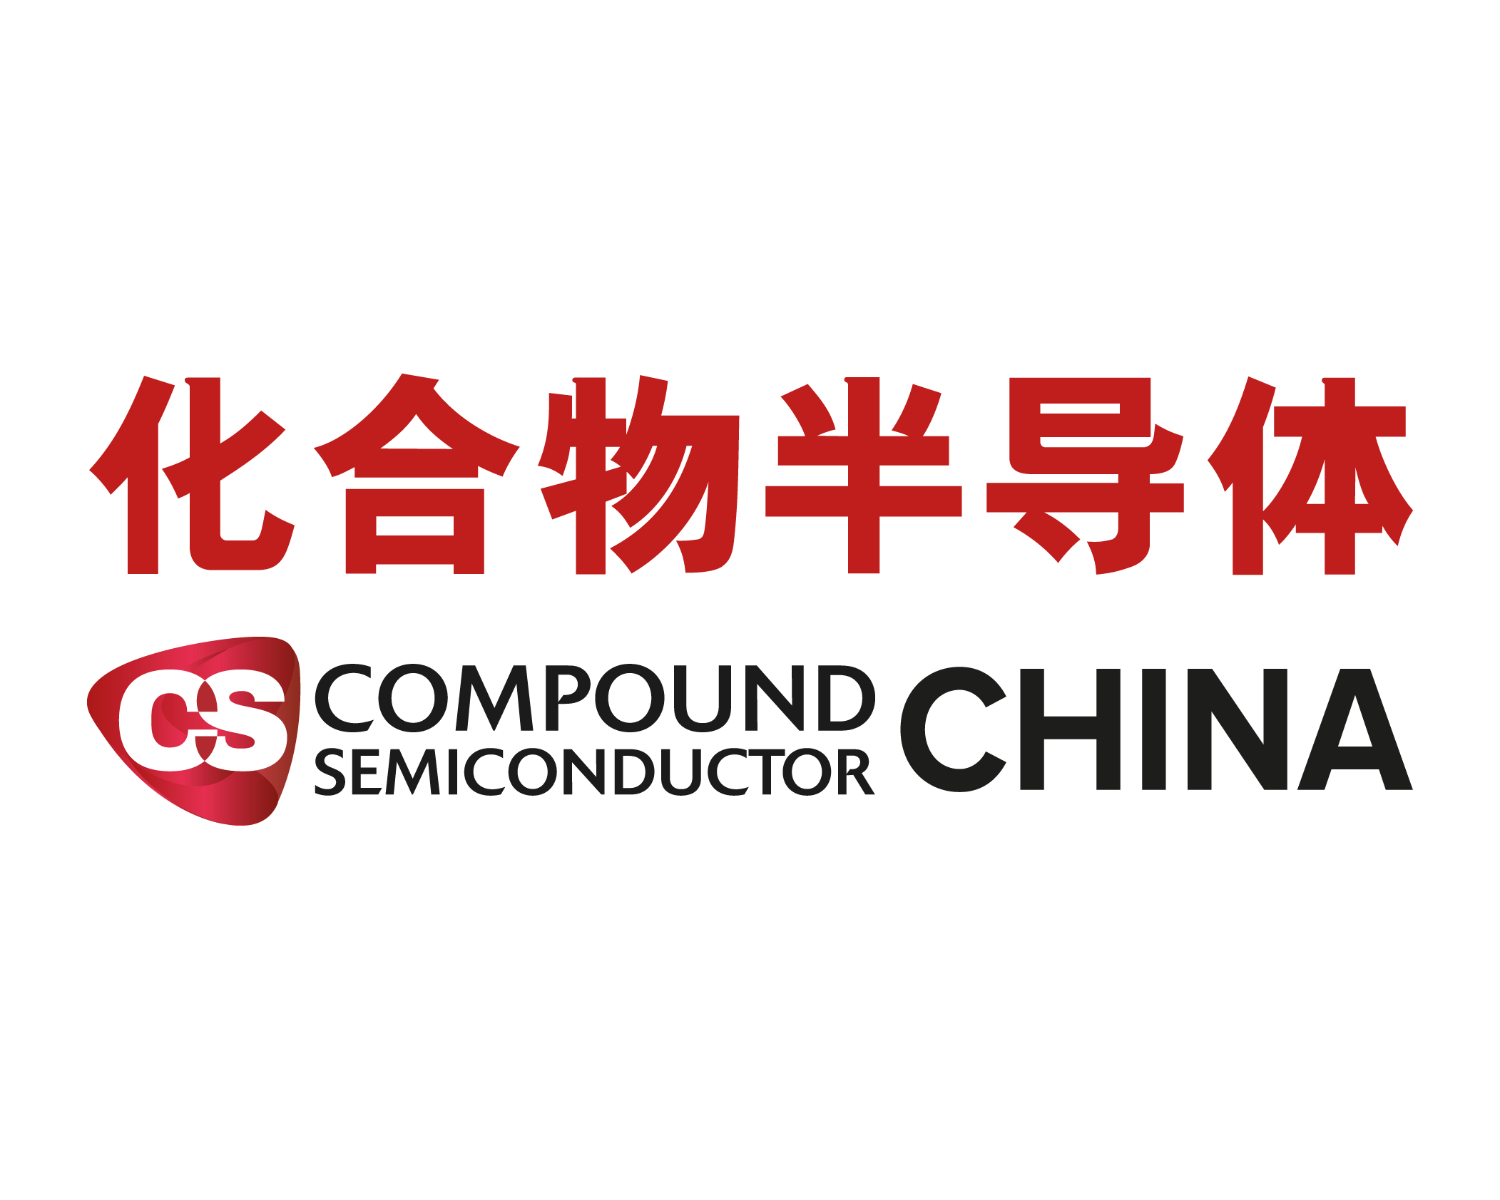 Compound Semiconductor China